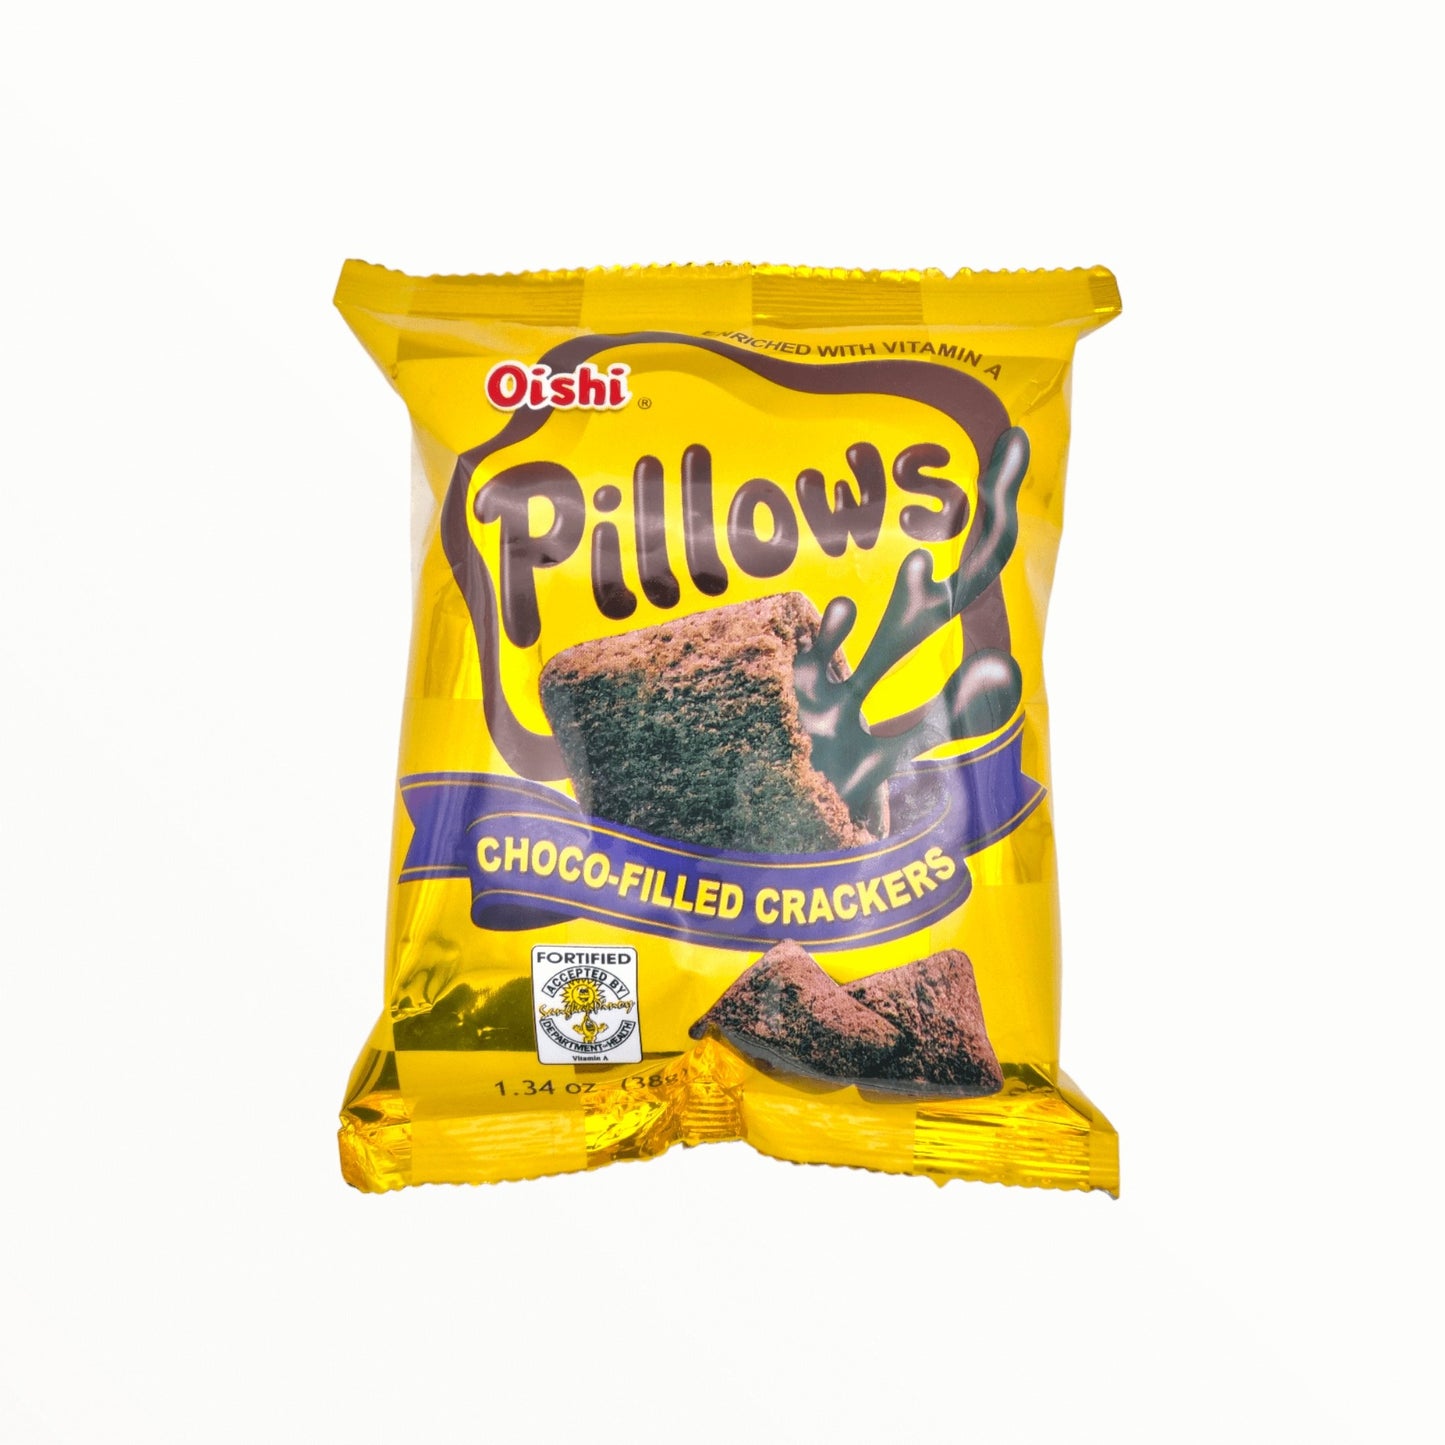 Pillows "Choco" Crackers 38g - Mabuhay Pinoy Asia Shop